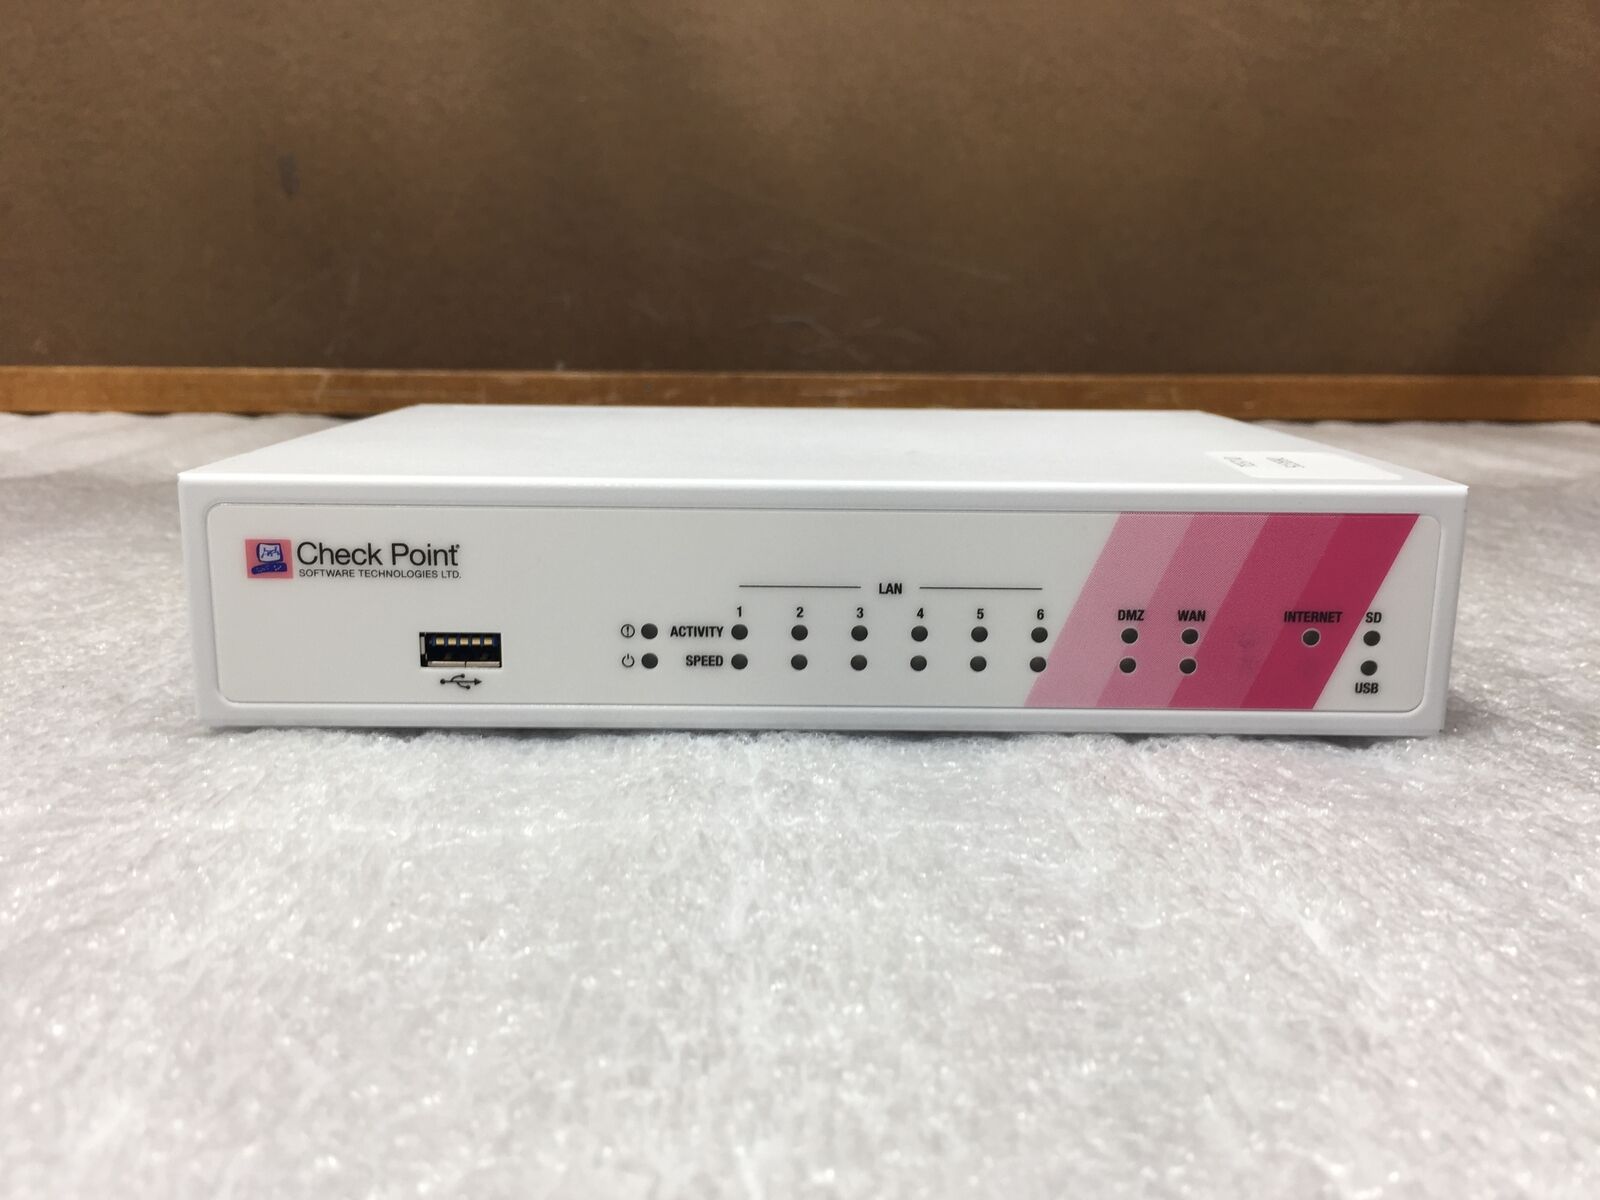 Check Point L-71 6 Port Gigabit Enterprise Firewall Security TESTED RESET